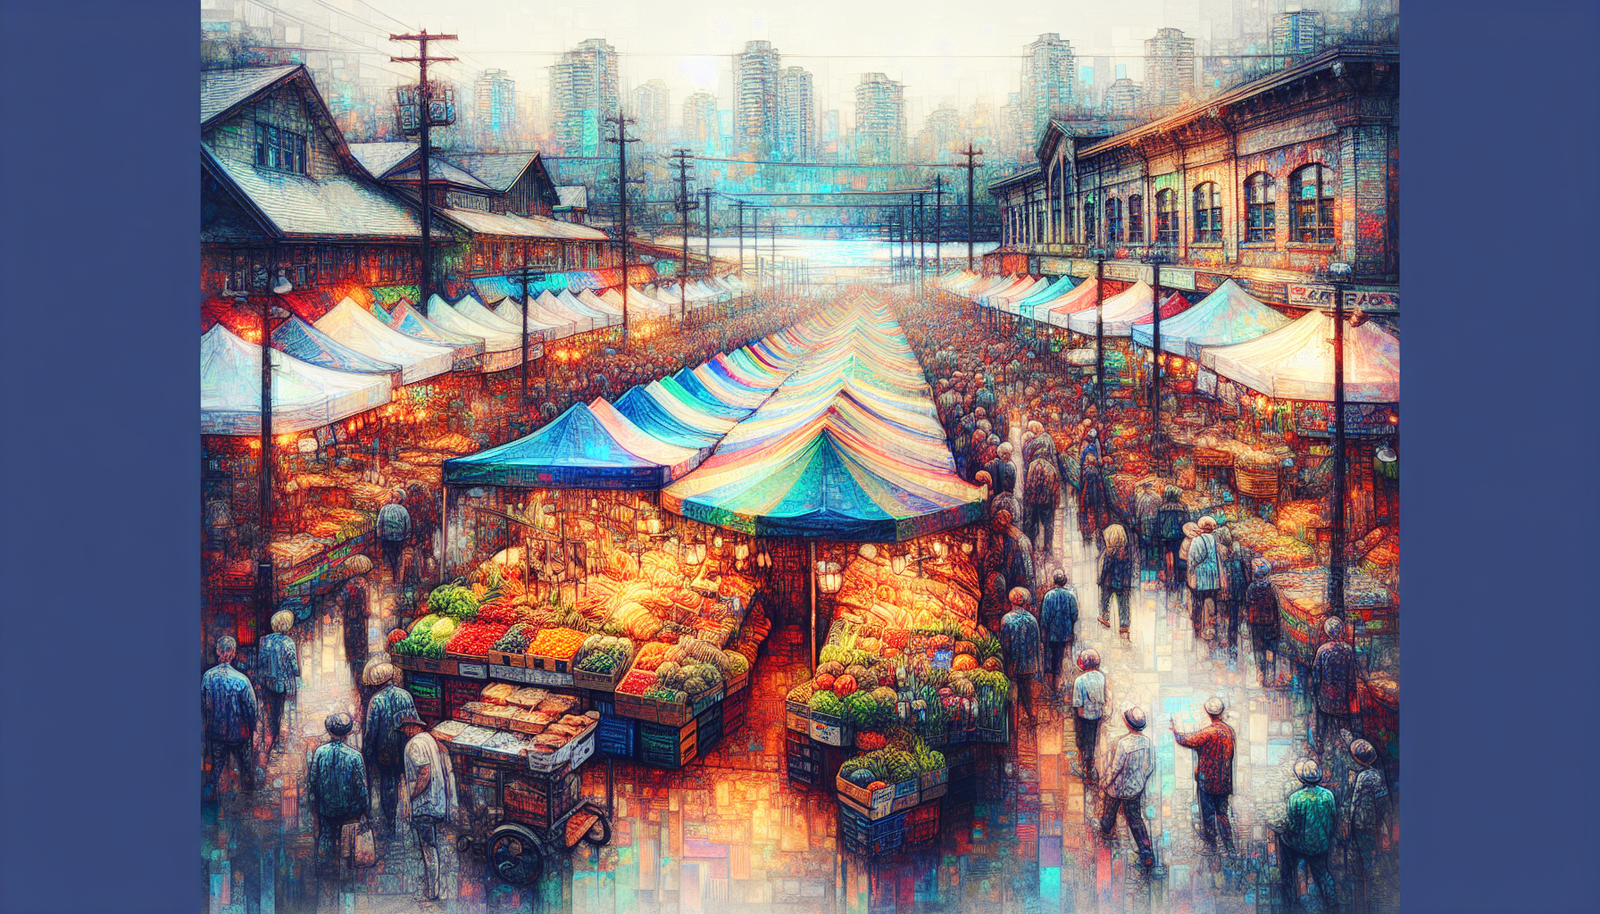 Artistic representation of Granville Island Public Market with vibrant stalls and live entertainment